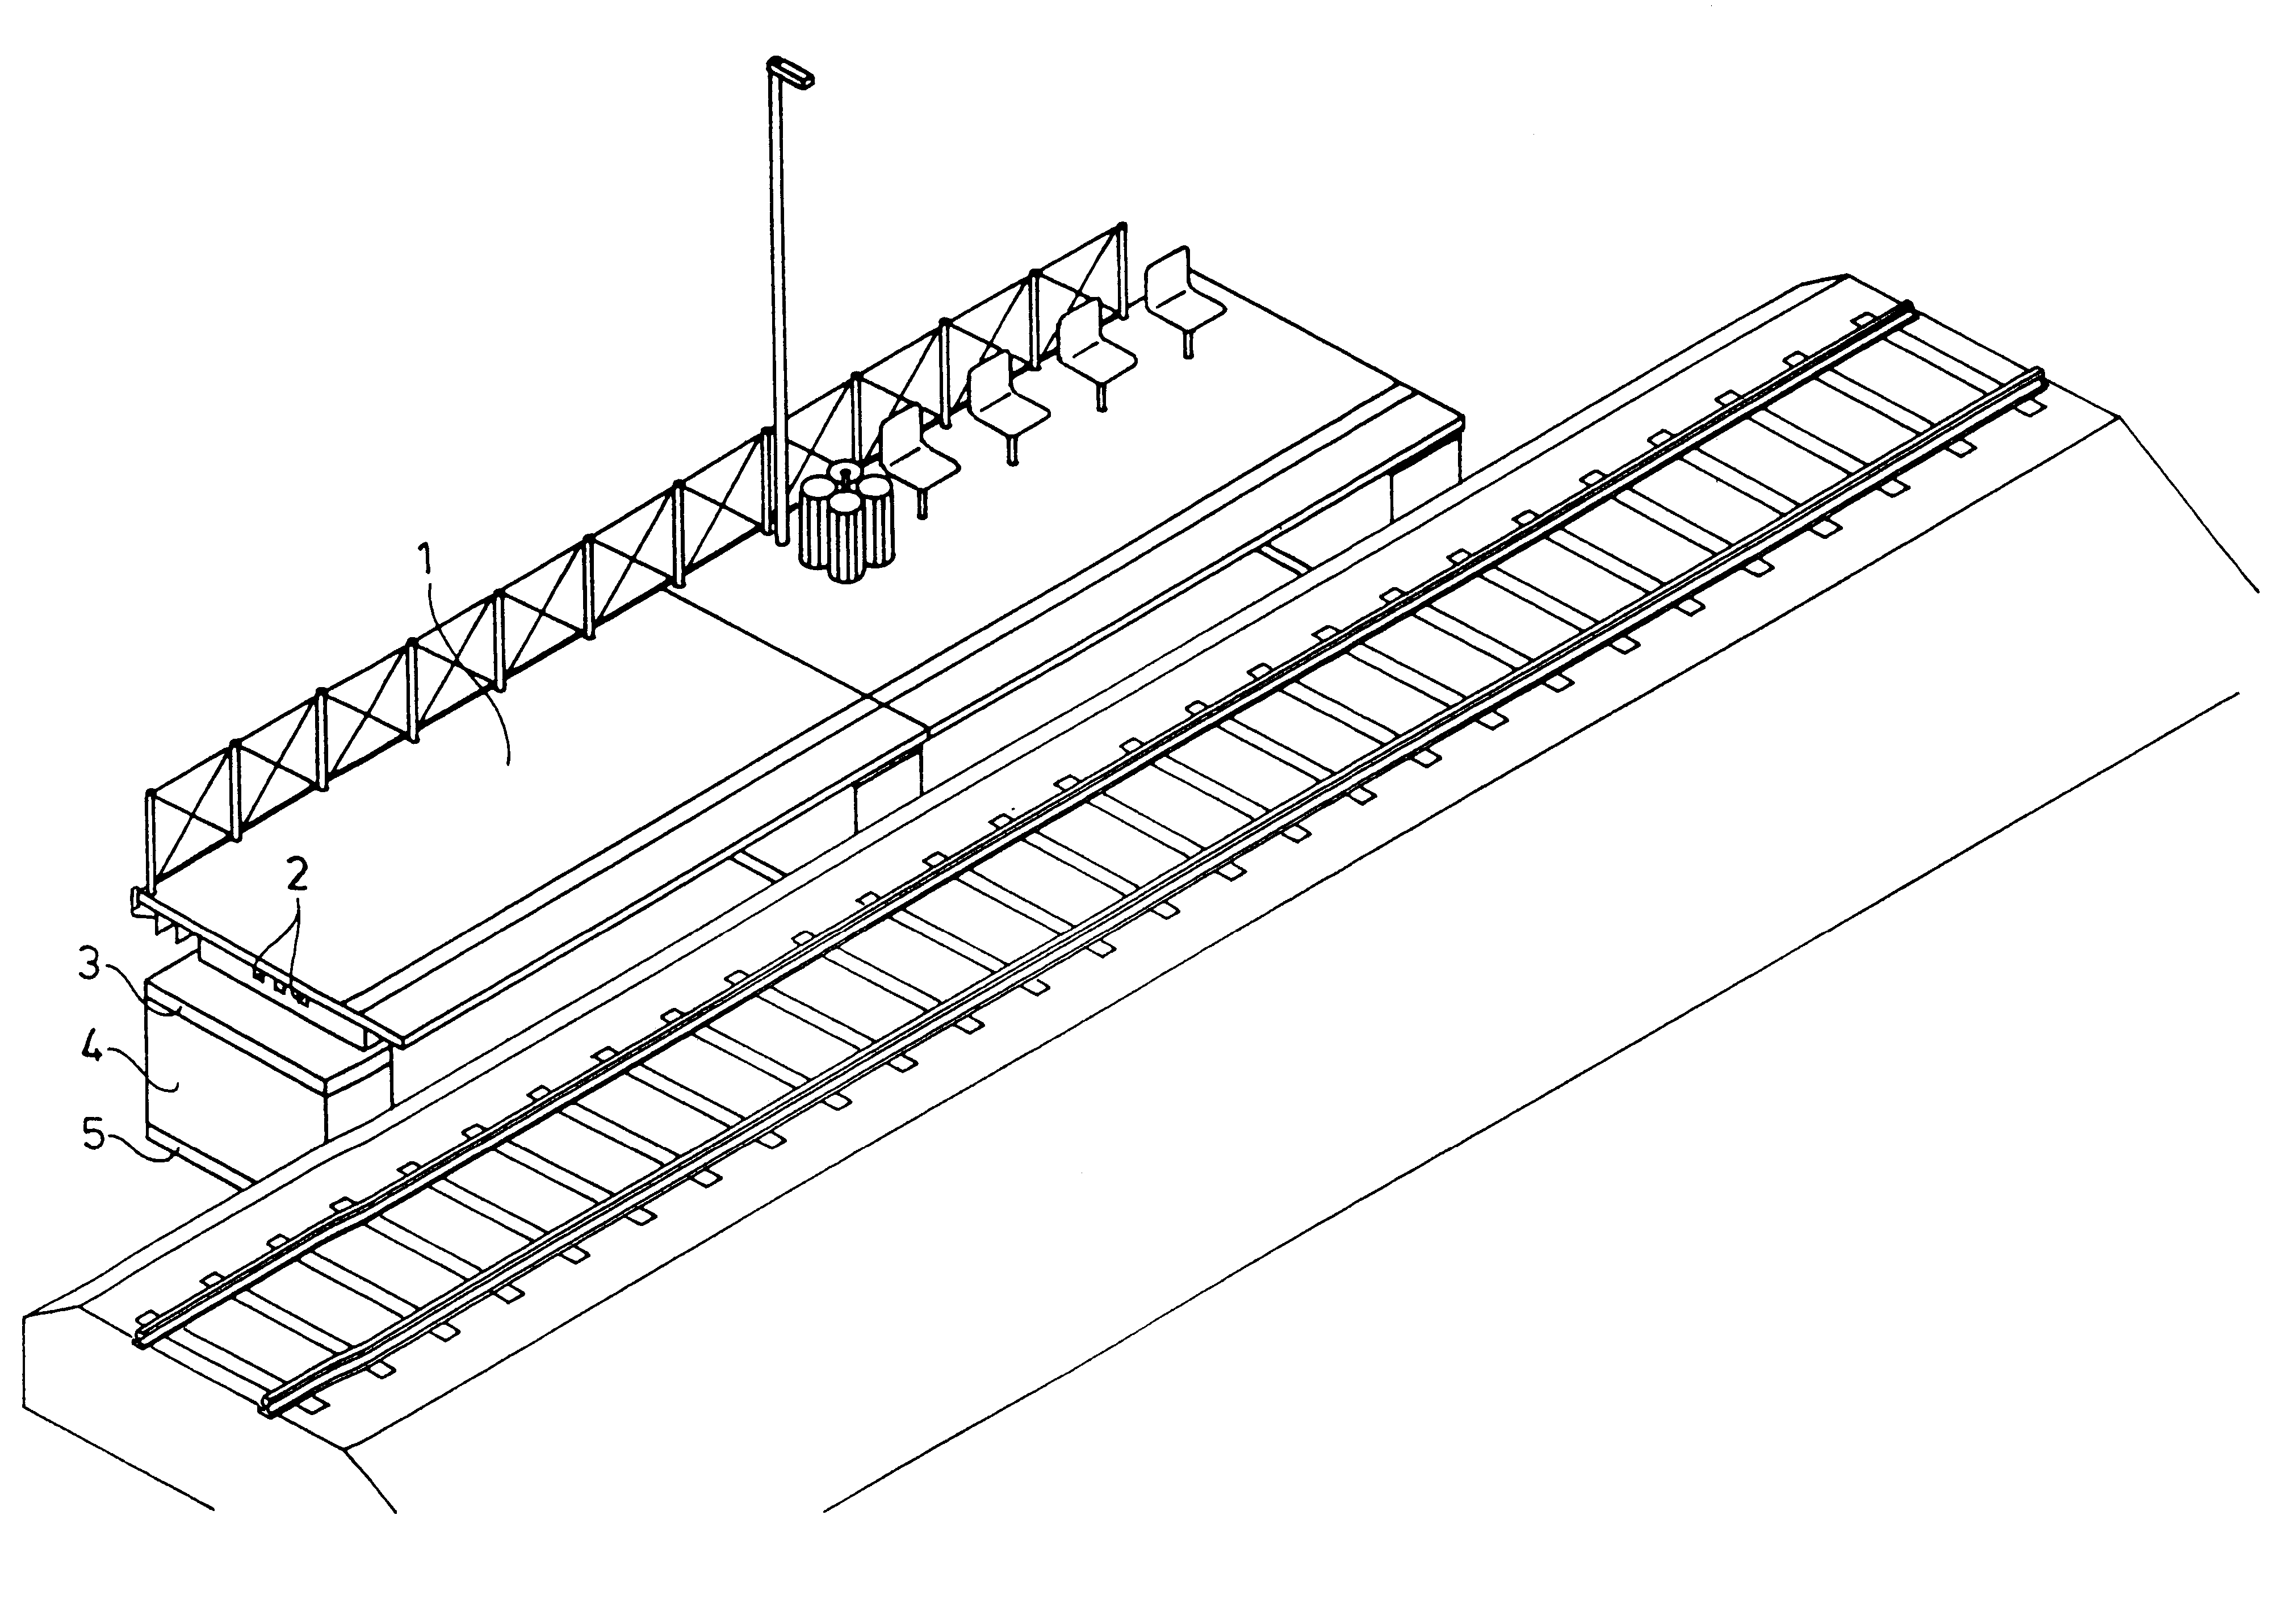 Modular station platform construction kit